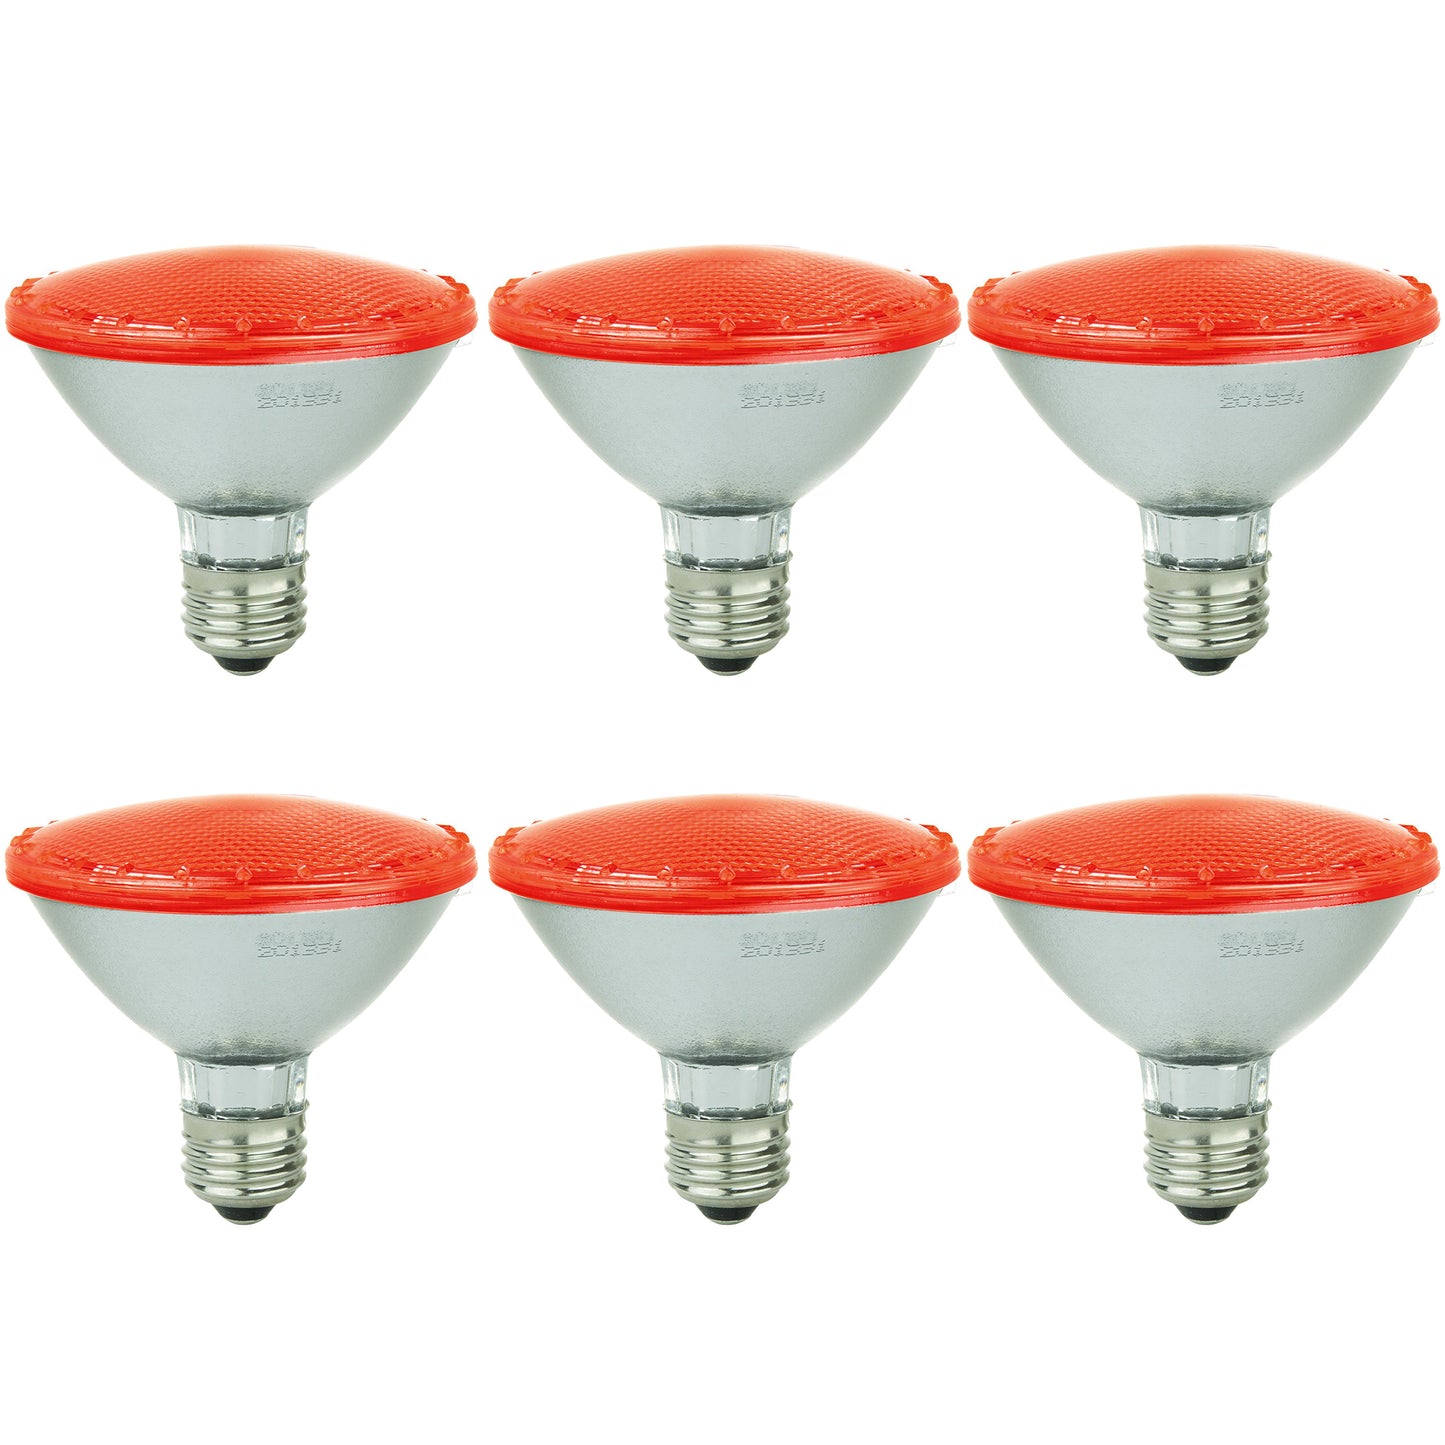 Sunlite LED PAR30 Colored Reflector 3W Light Bulb Medium (E26) Base, Red